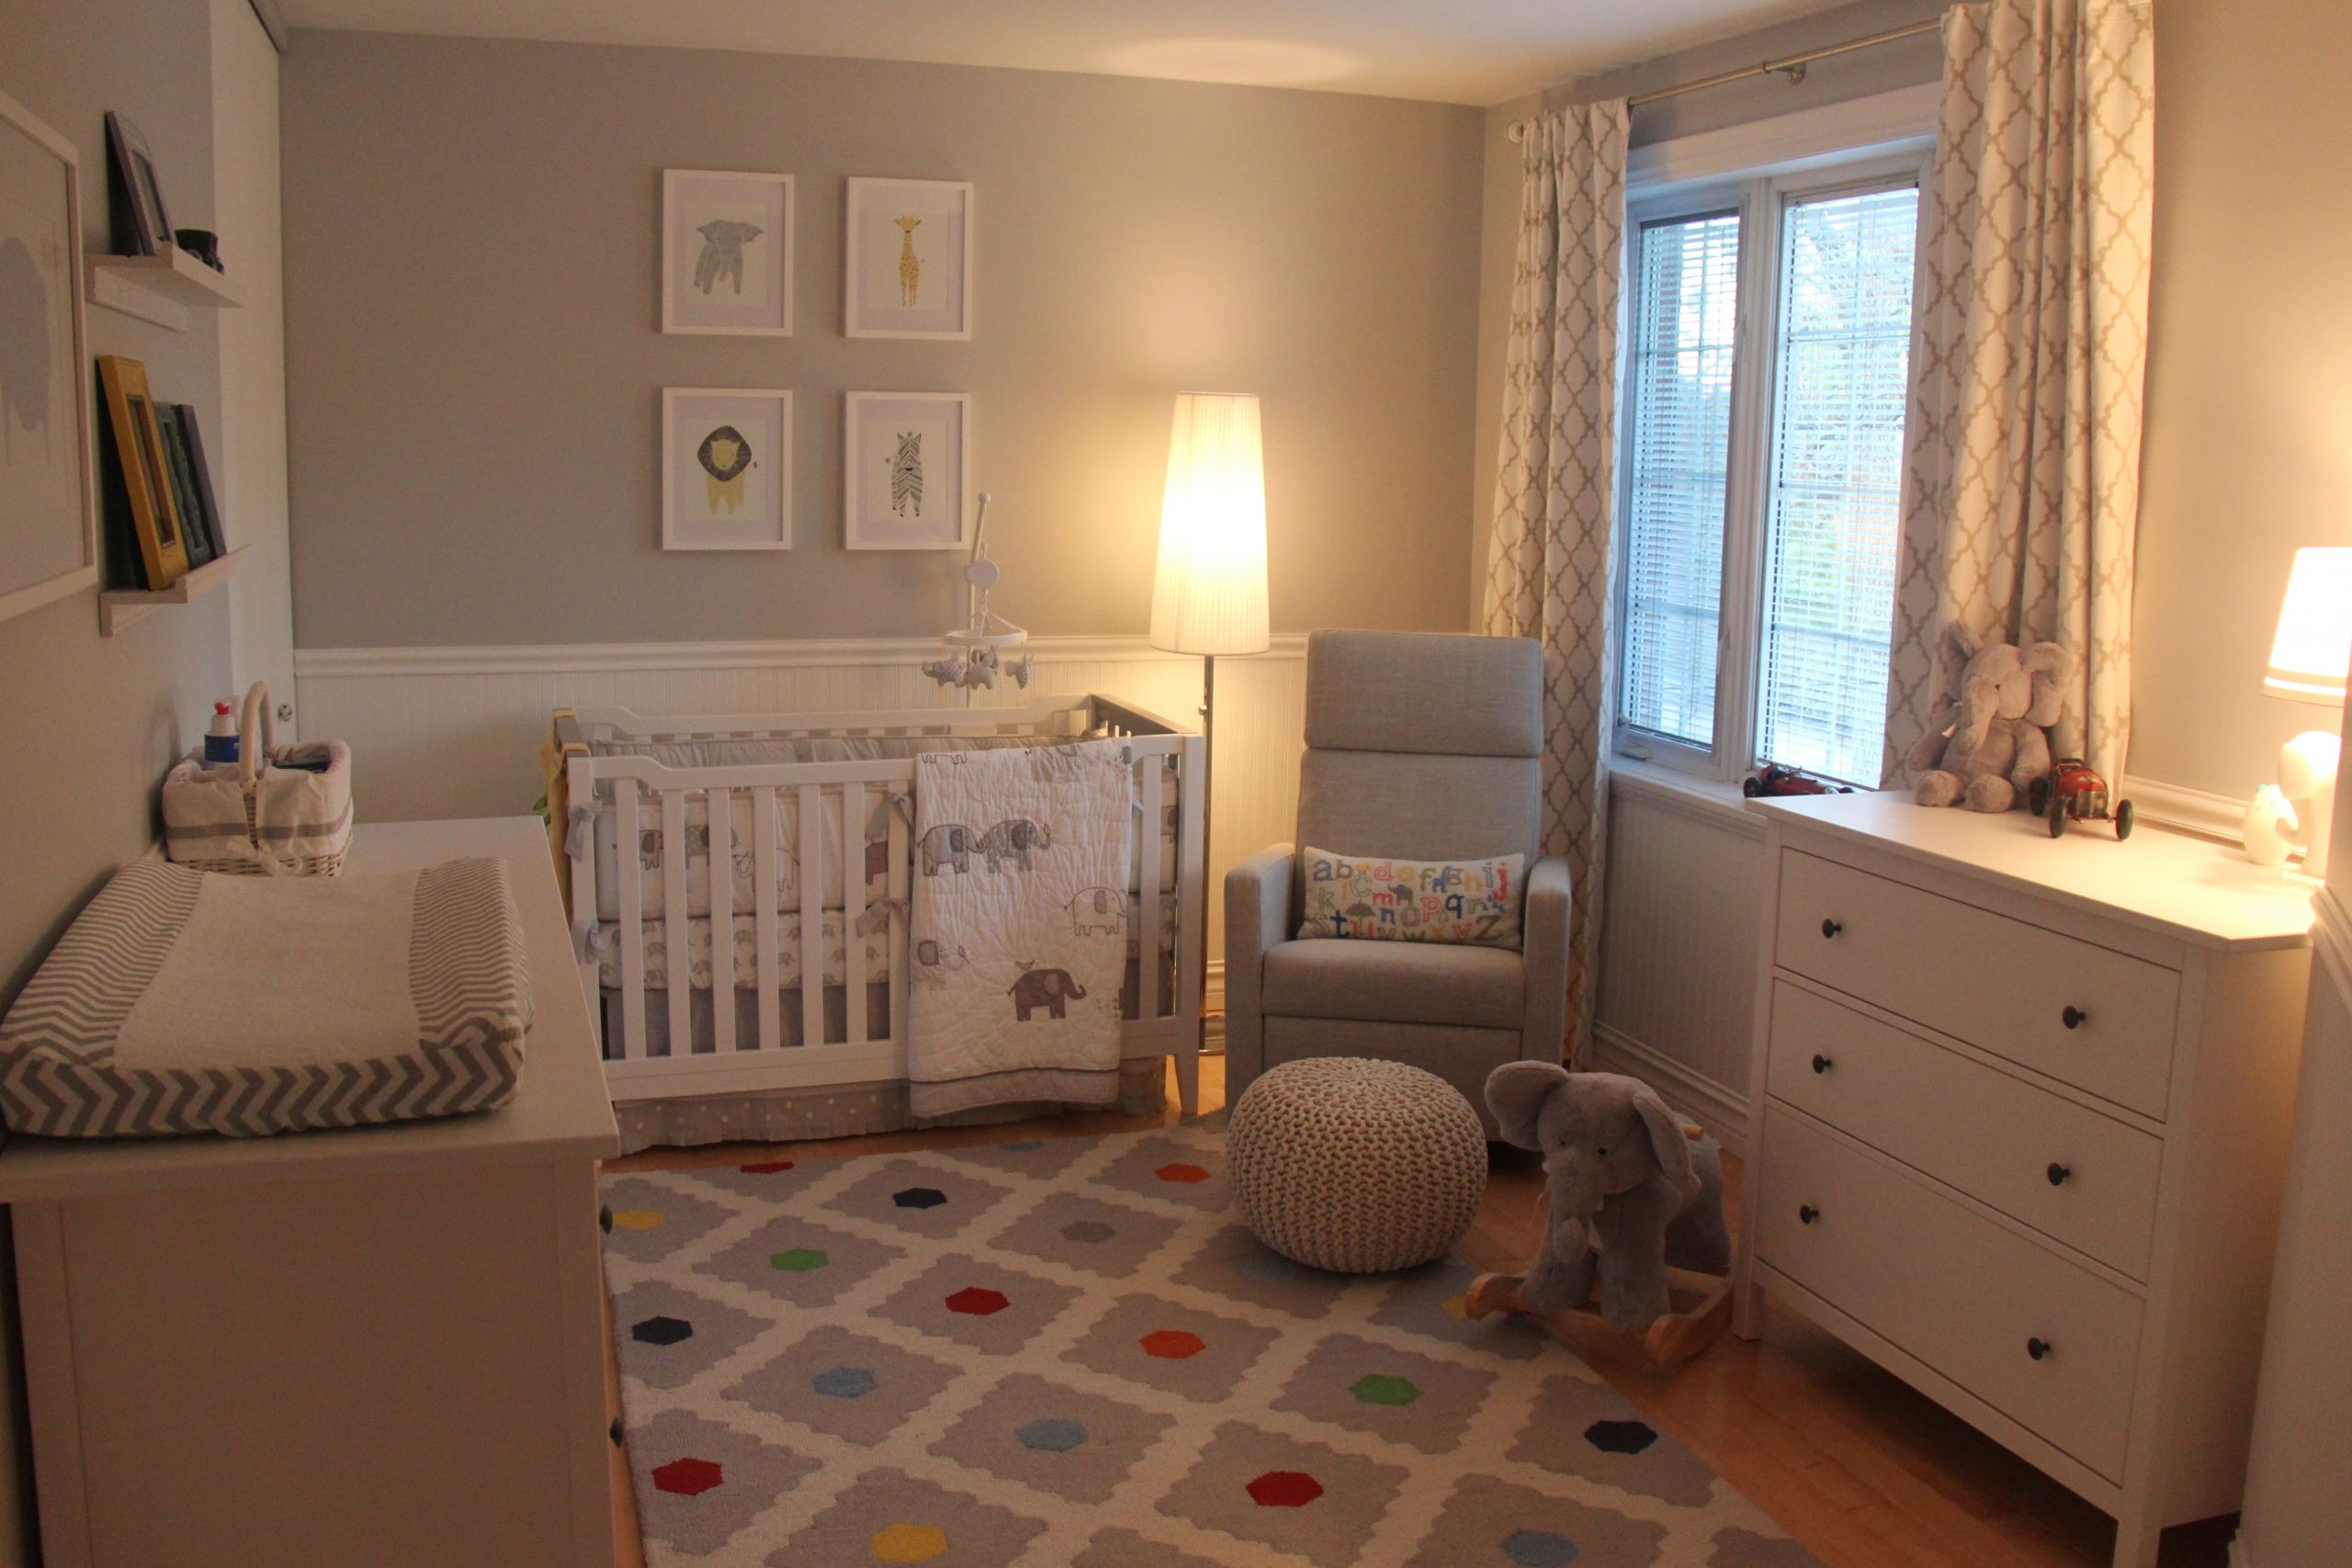 Baby Boy Bedroom Ideas
 Our Little Baby Boy s Neutral Room Project Nursery